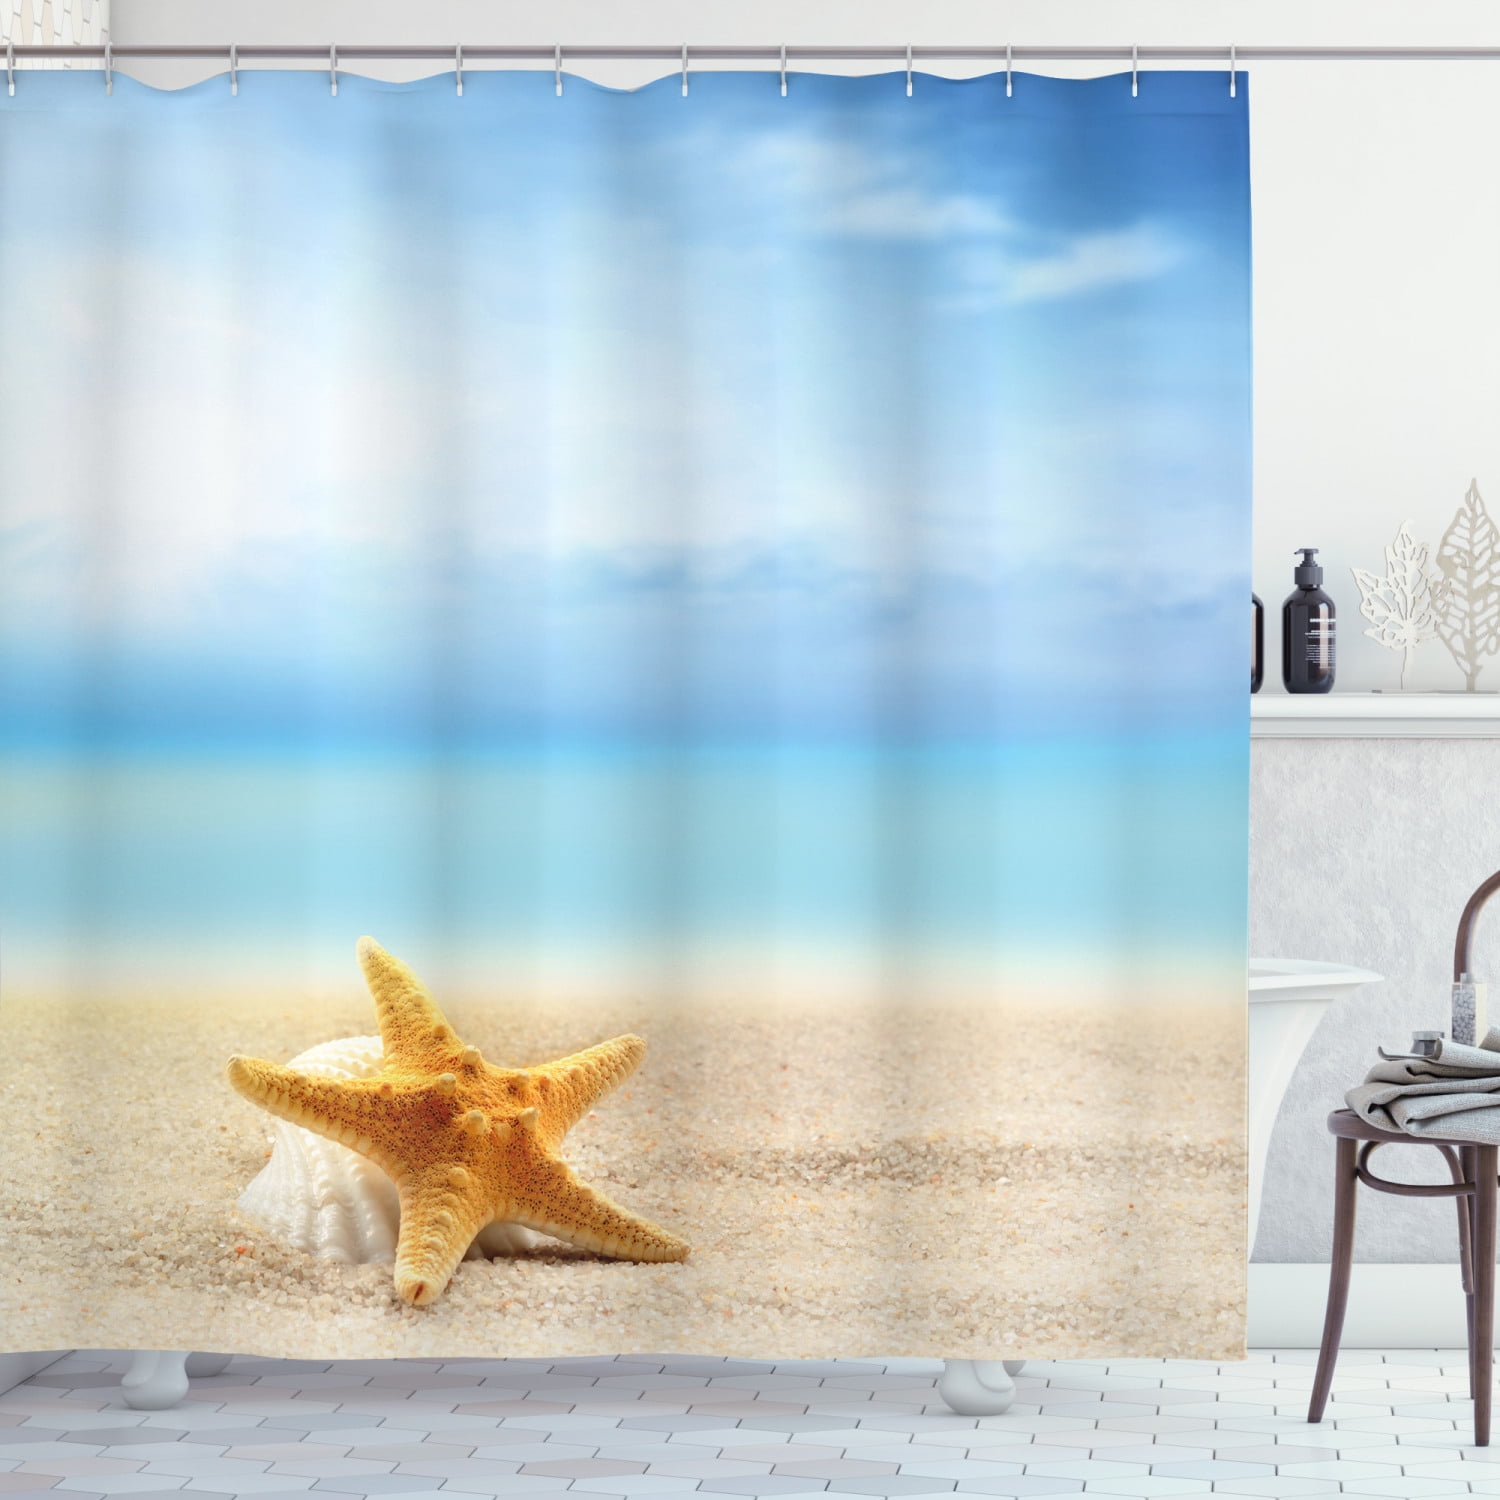 Sea Turtles and Starfish At Ocean Sandy Beach Shower Curtain for Bathroom & Hook 